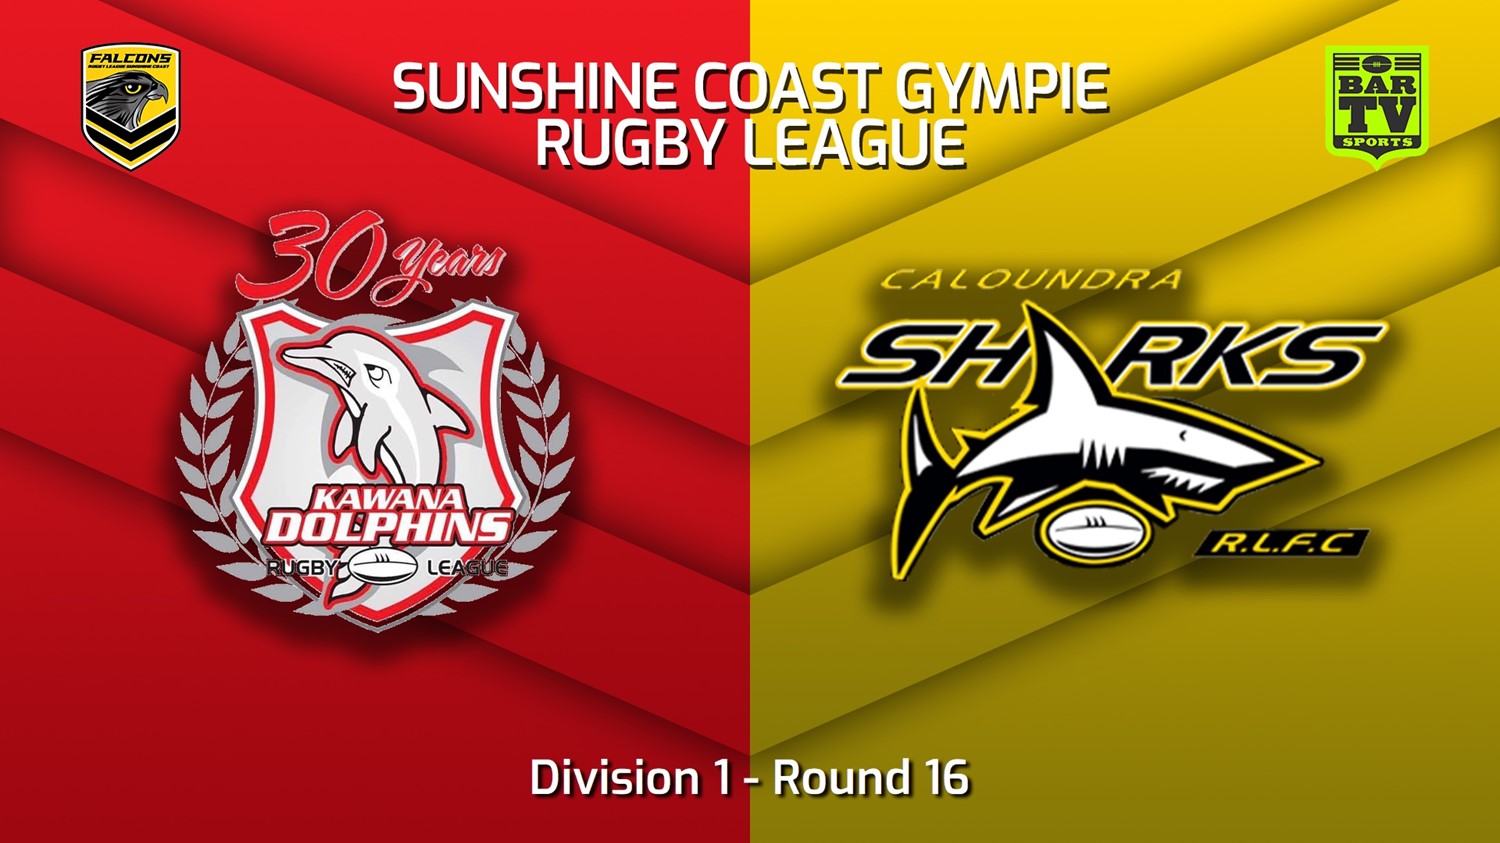 220807-Sunshine Coast RL Round 16 - Division 1 - Kawana Dolphins v Caloundra Sharks Slate Image